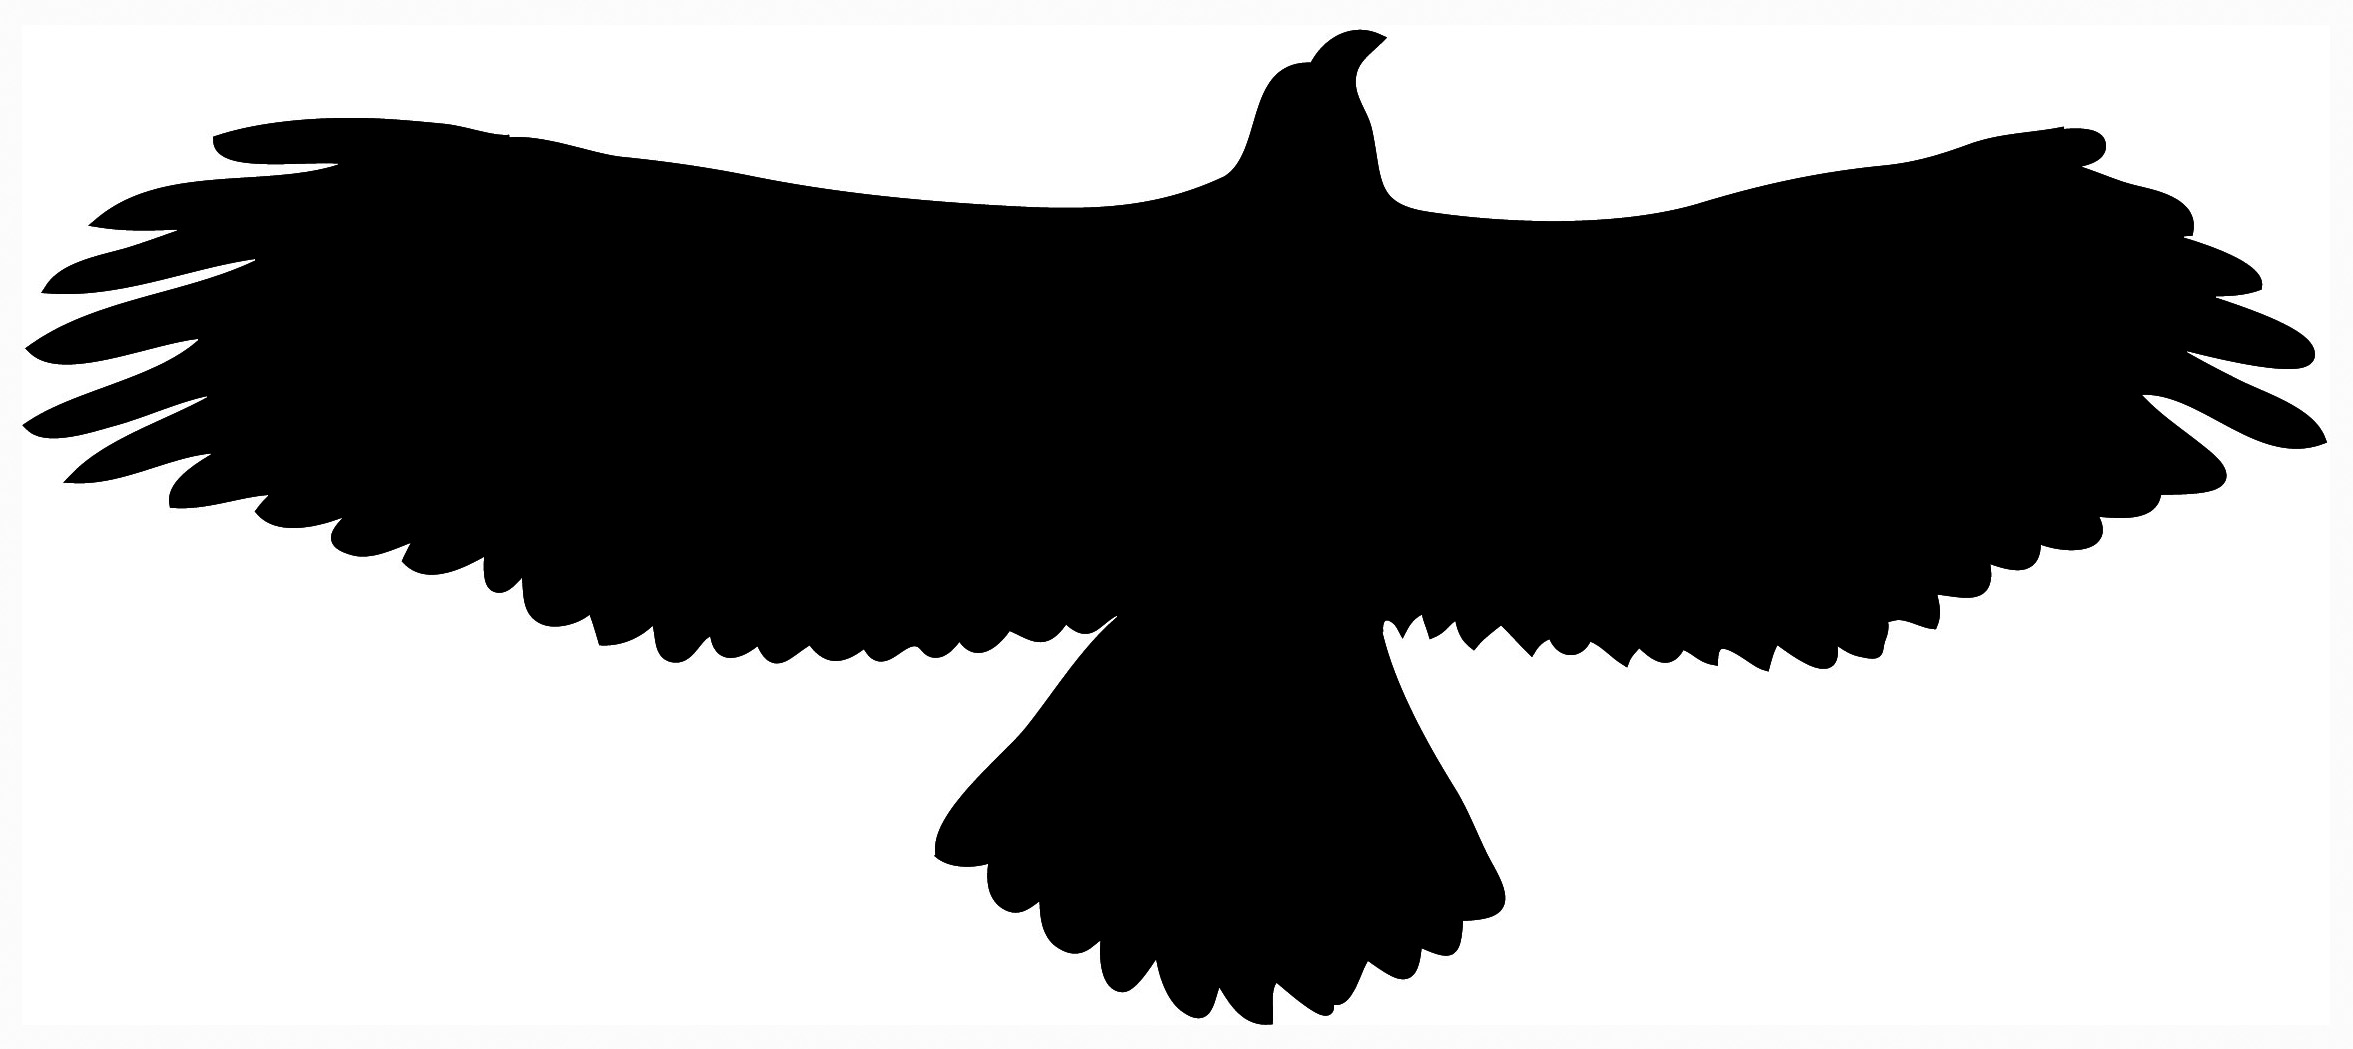 Images For  Flying Raven Silhouette Clip Art